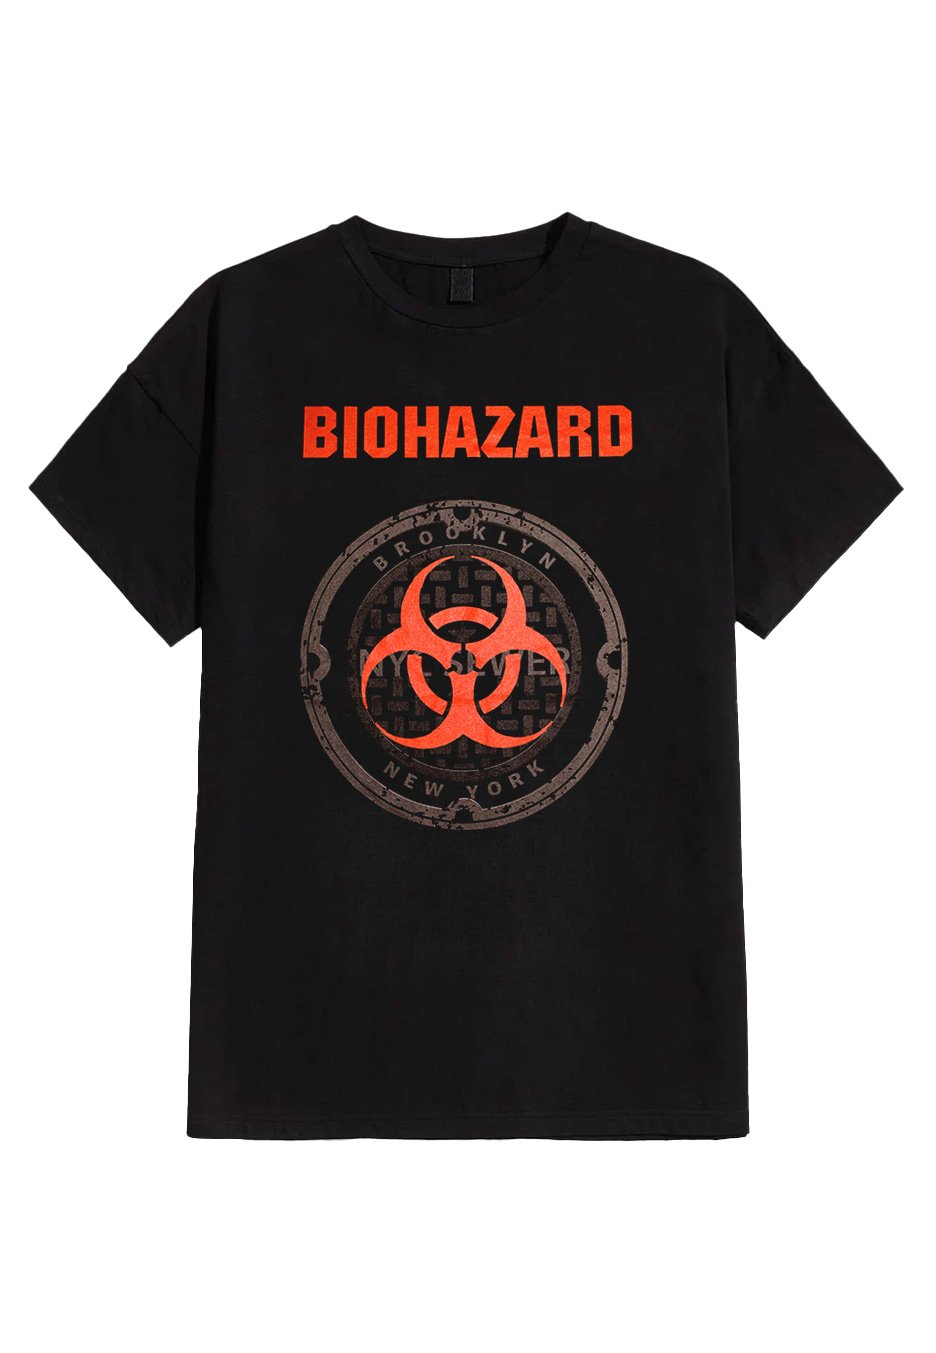 Biohazard - NYC Sewer - T-Shirt